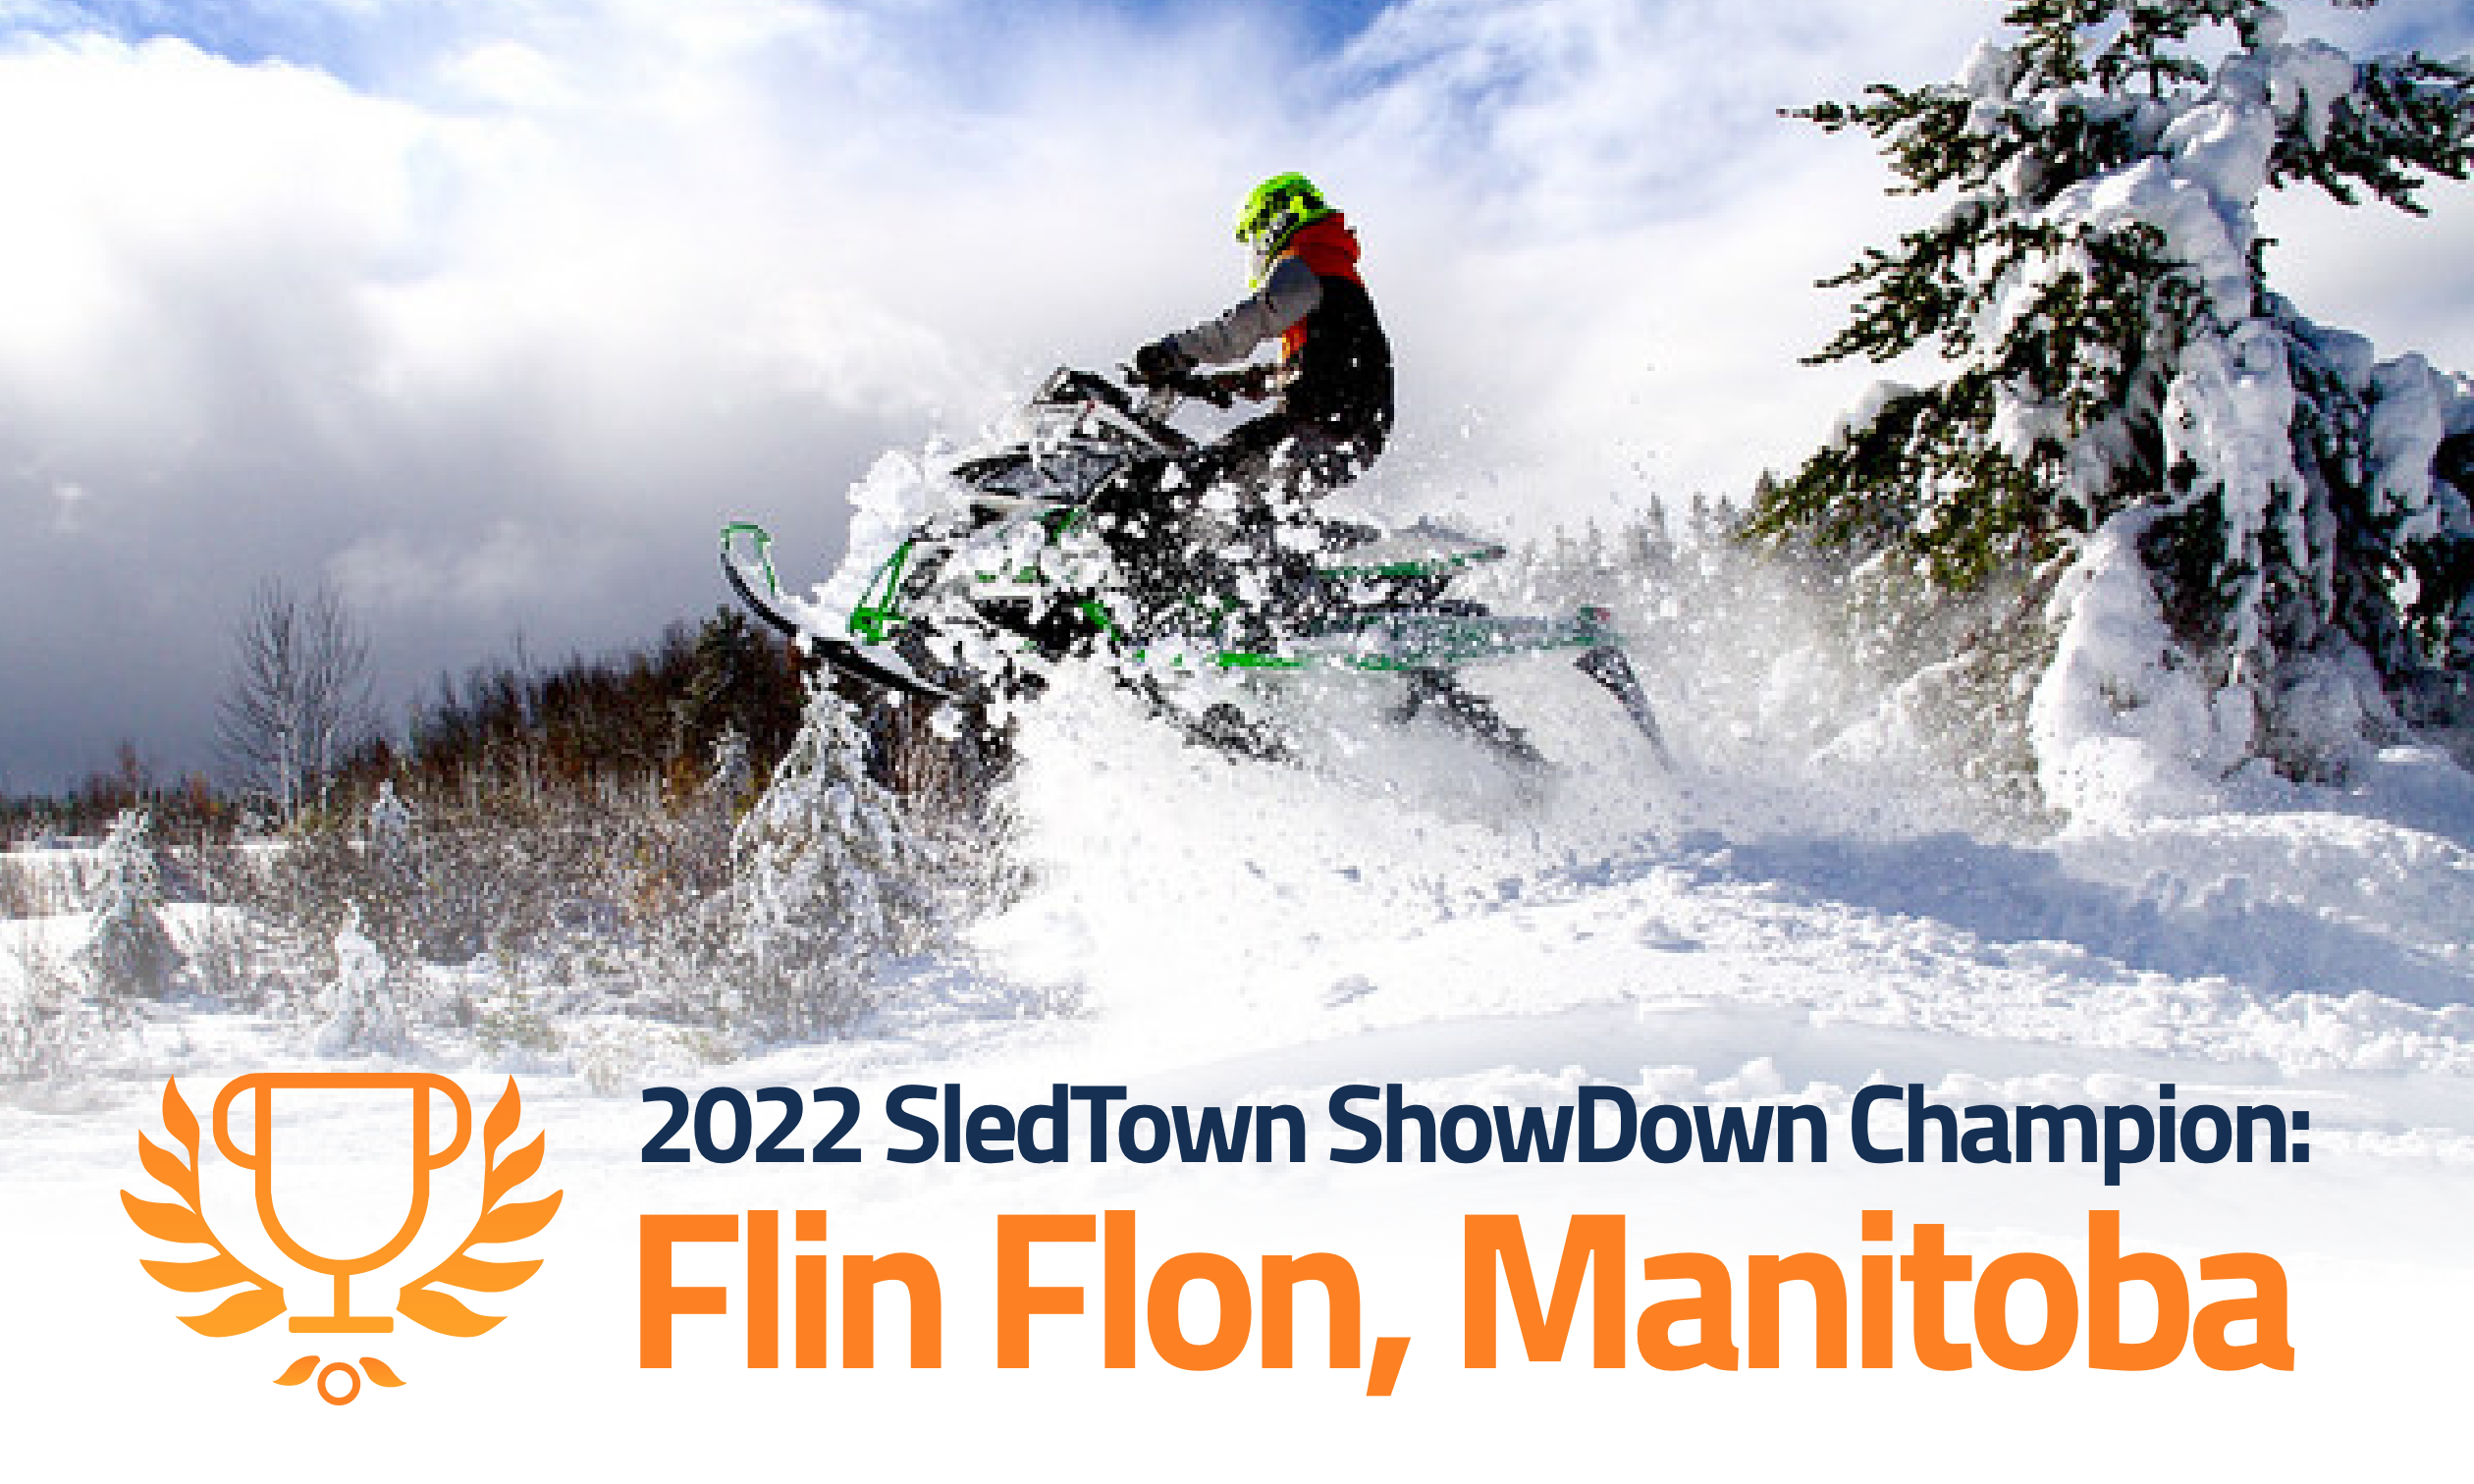 2022 SledTown ShowDown Champion Flin Flon, Manitoba